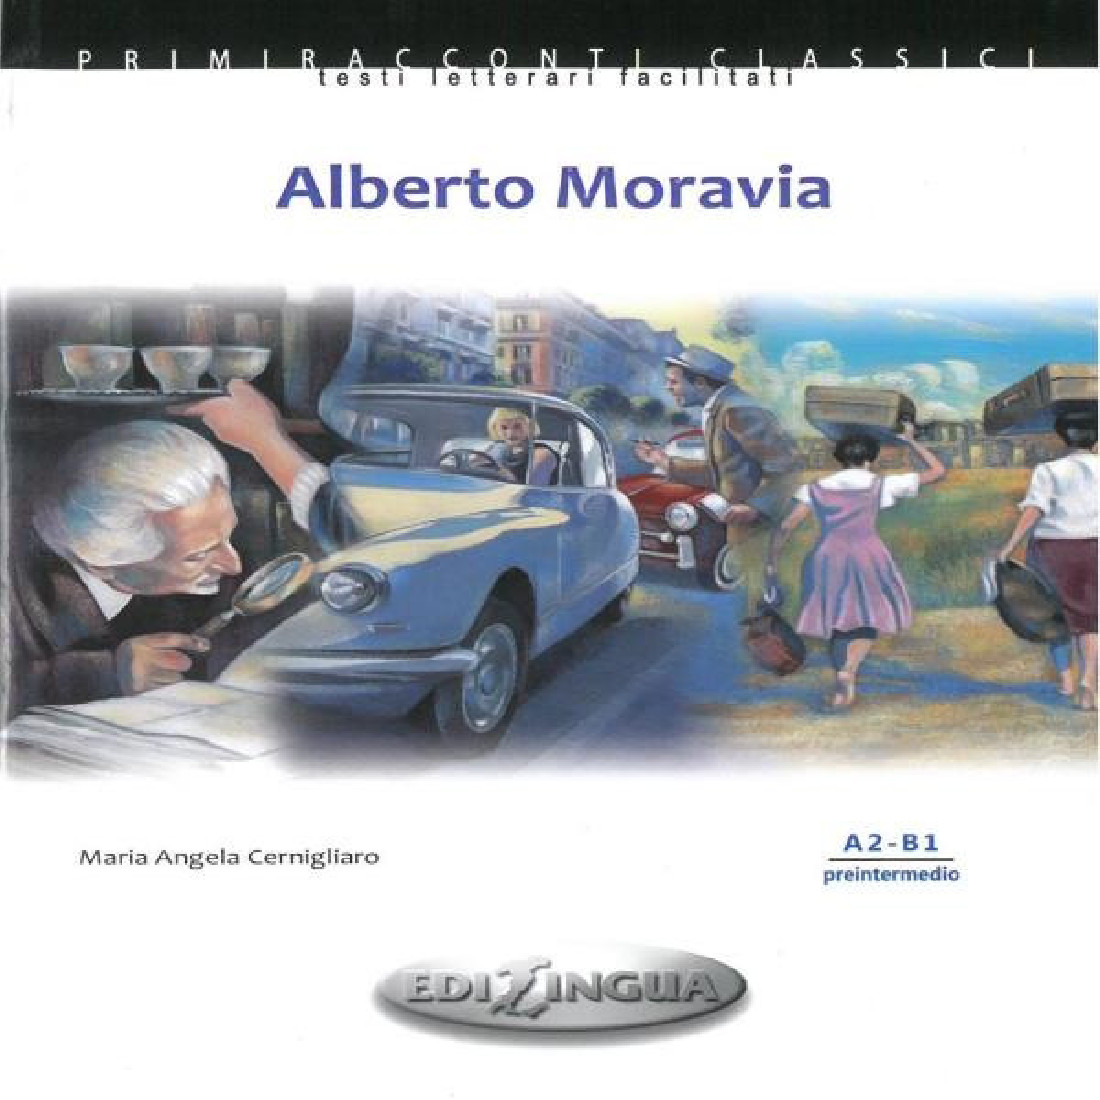 ALBERTO MORAVIA (A2-B1)